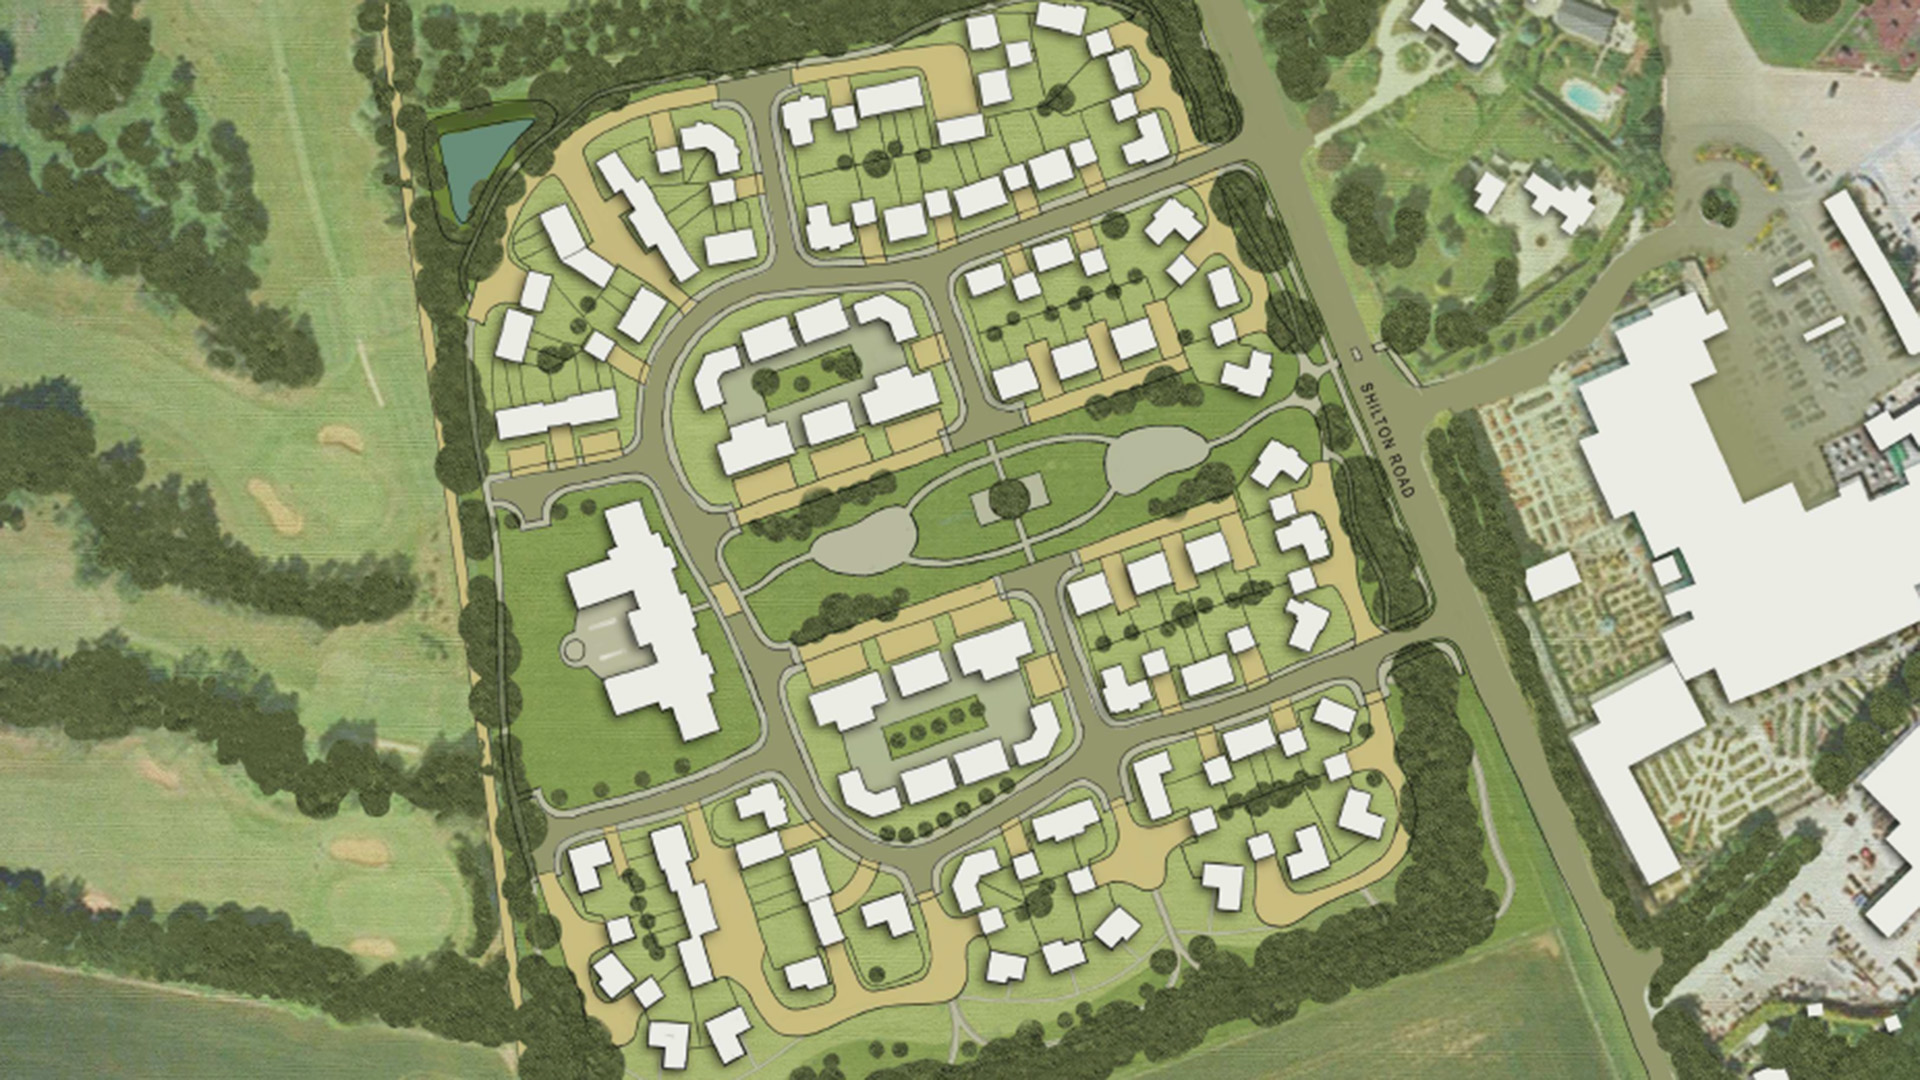 Burford, Oxfordshire land planning applications. Masterplan diagram.